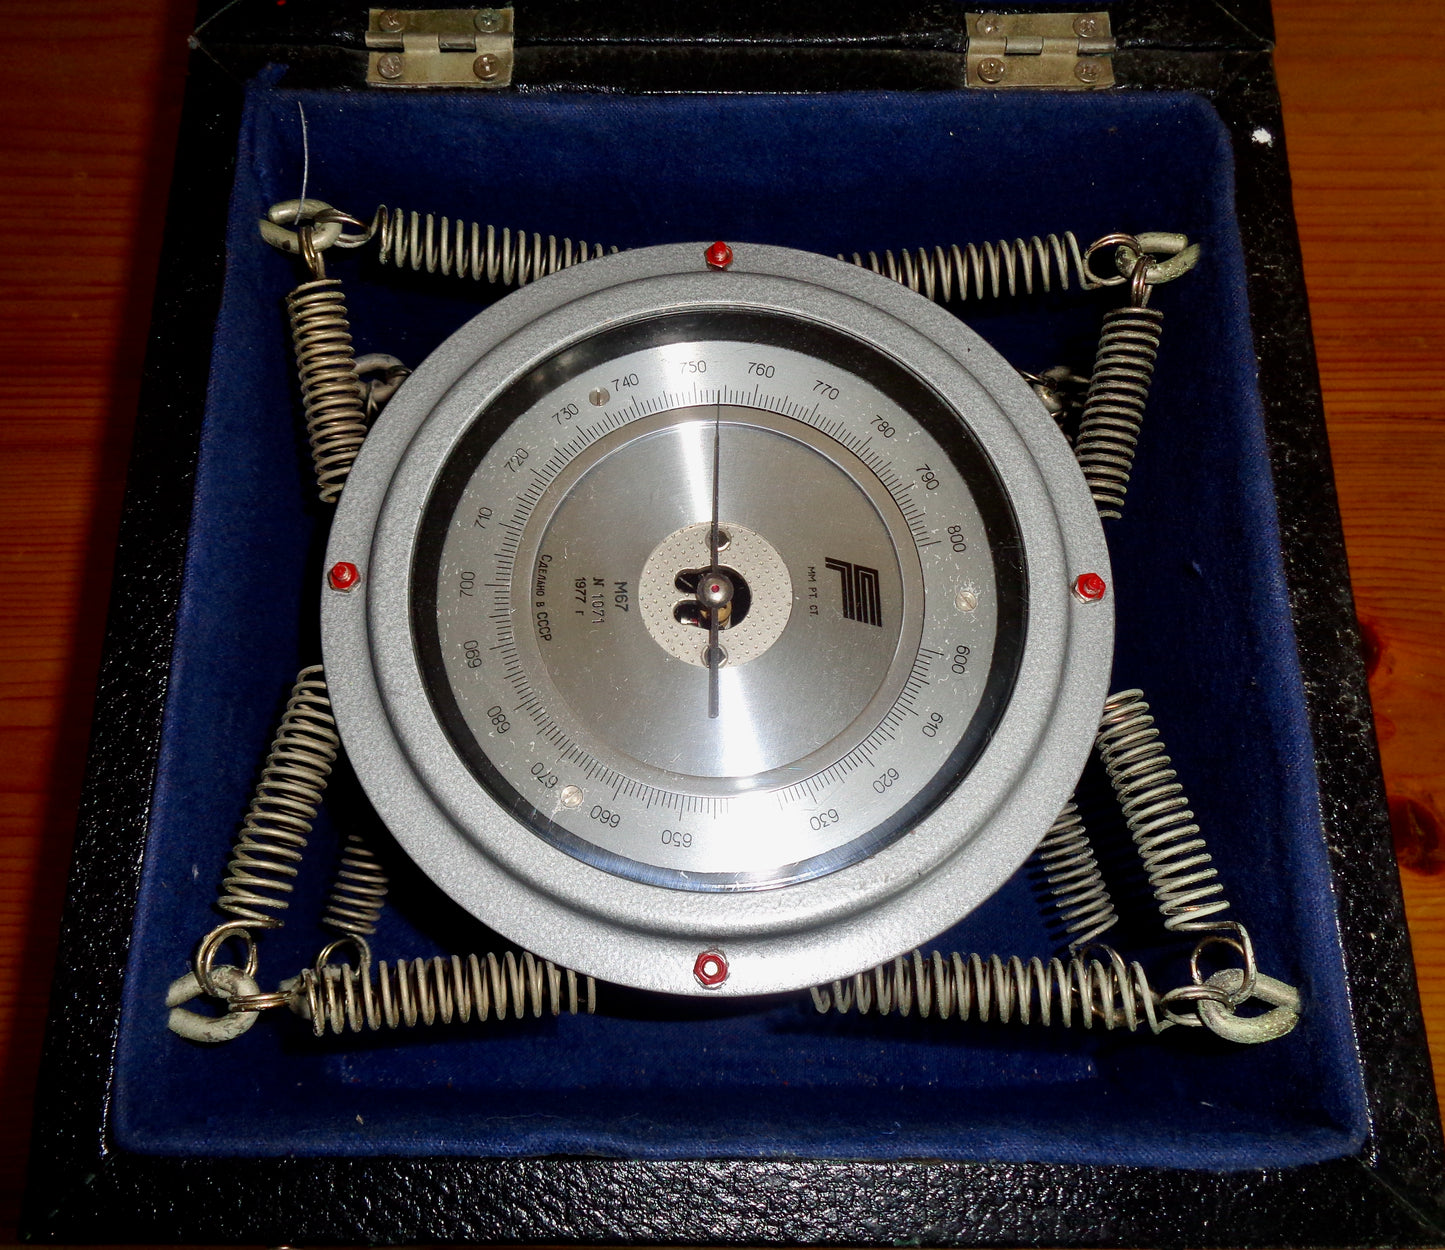 1977 M67 Russian Soviet Marine Aneroid Barometer In Original Transit Case